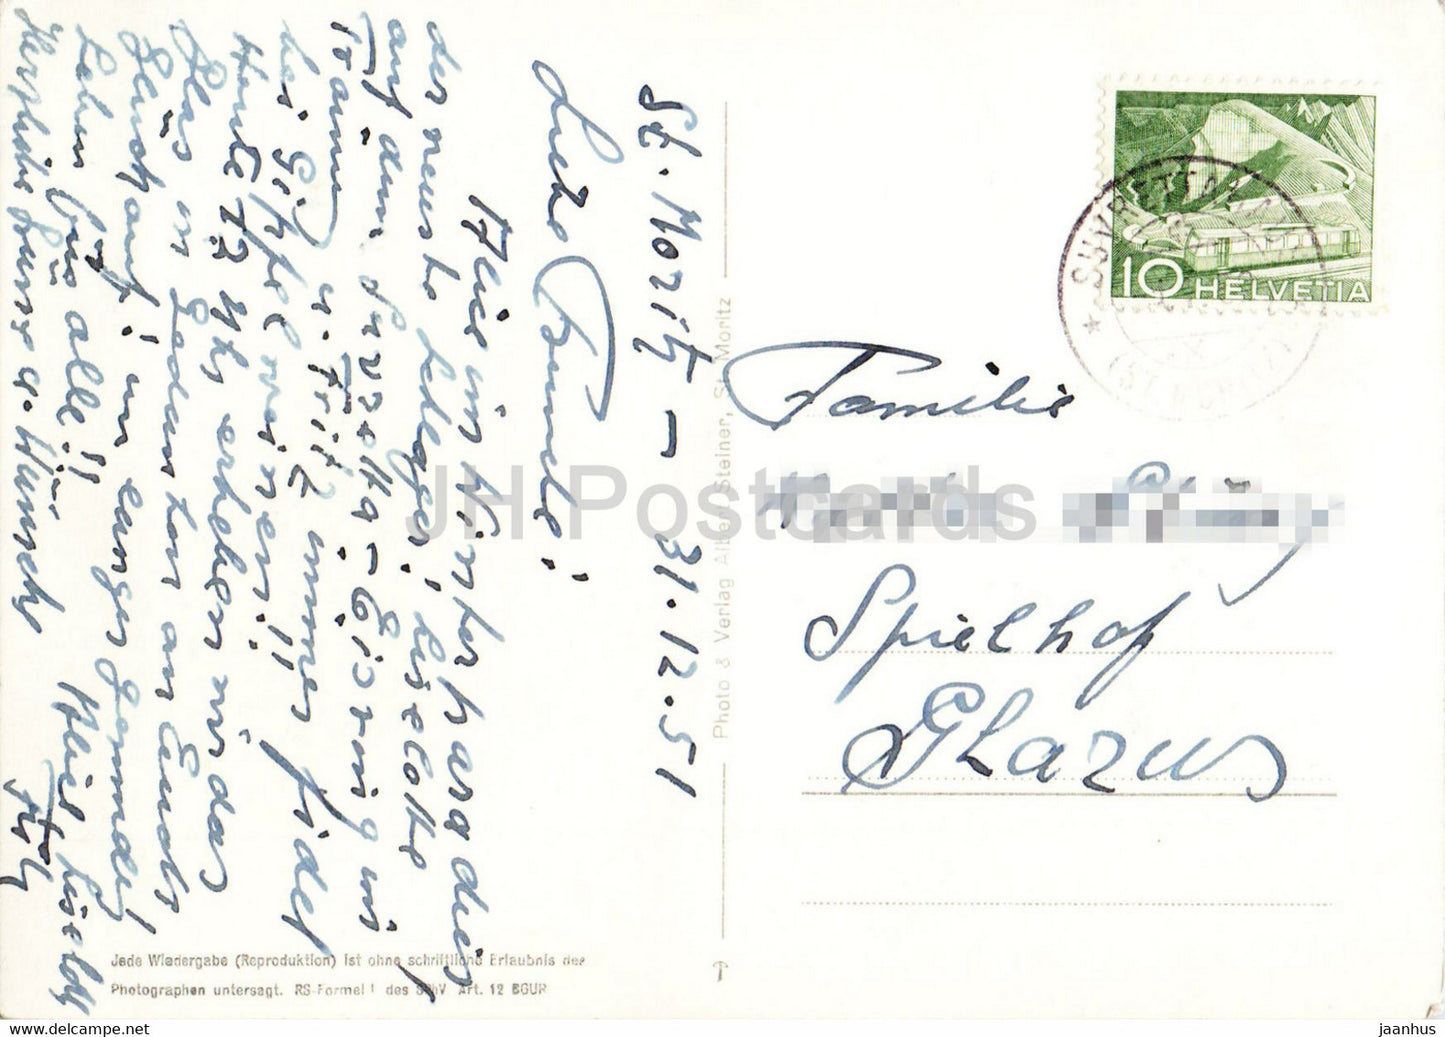 St Moritz - Oberalpina - 5835 - 1951 - carte postale ancienne - Suisse - utilisé